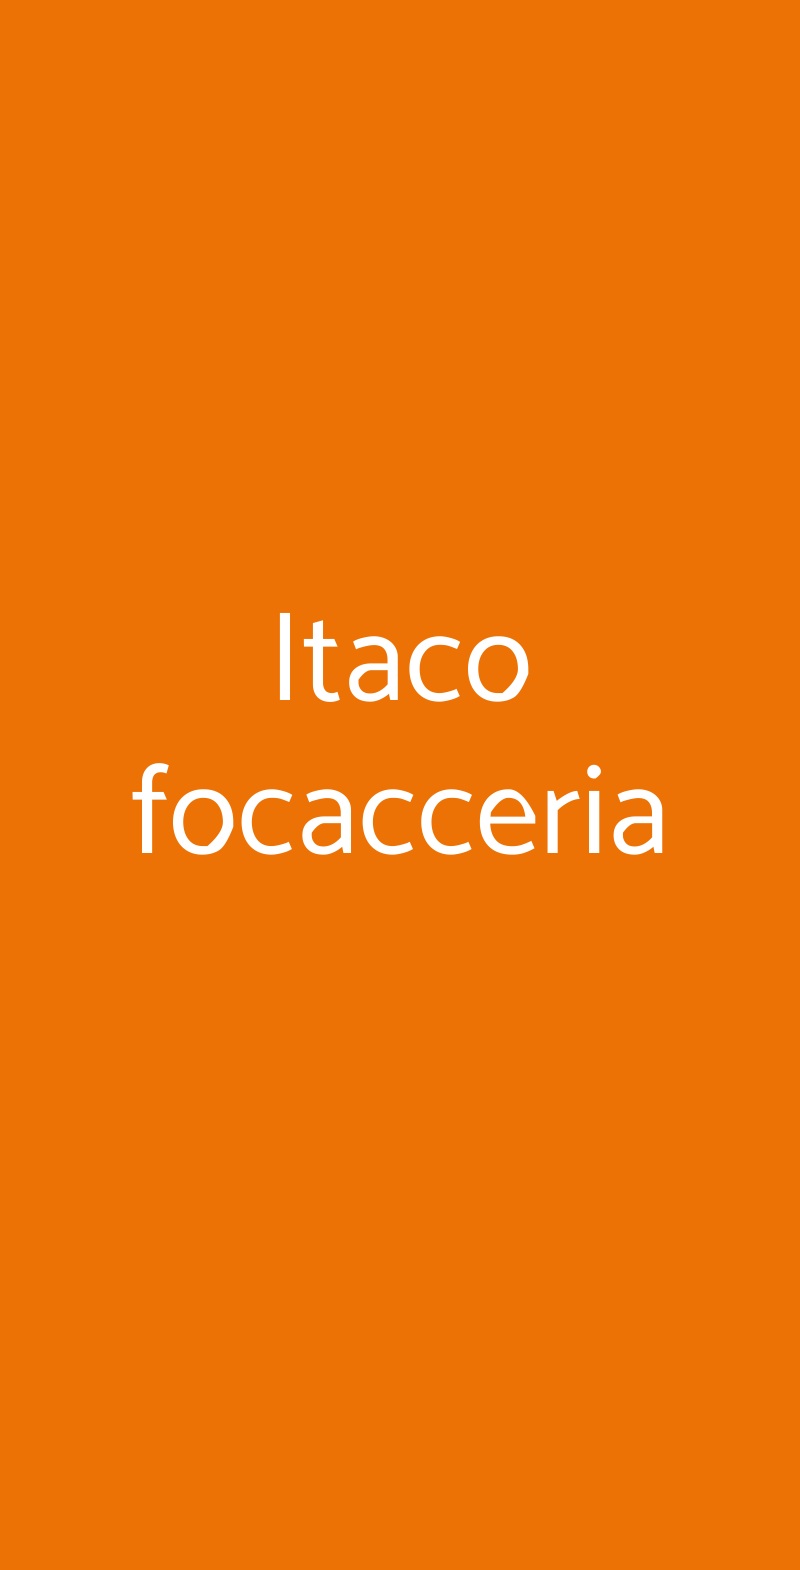 Itaco focacceria Firenze menù 1 pagina